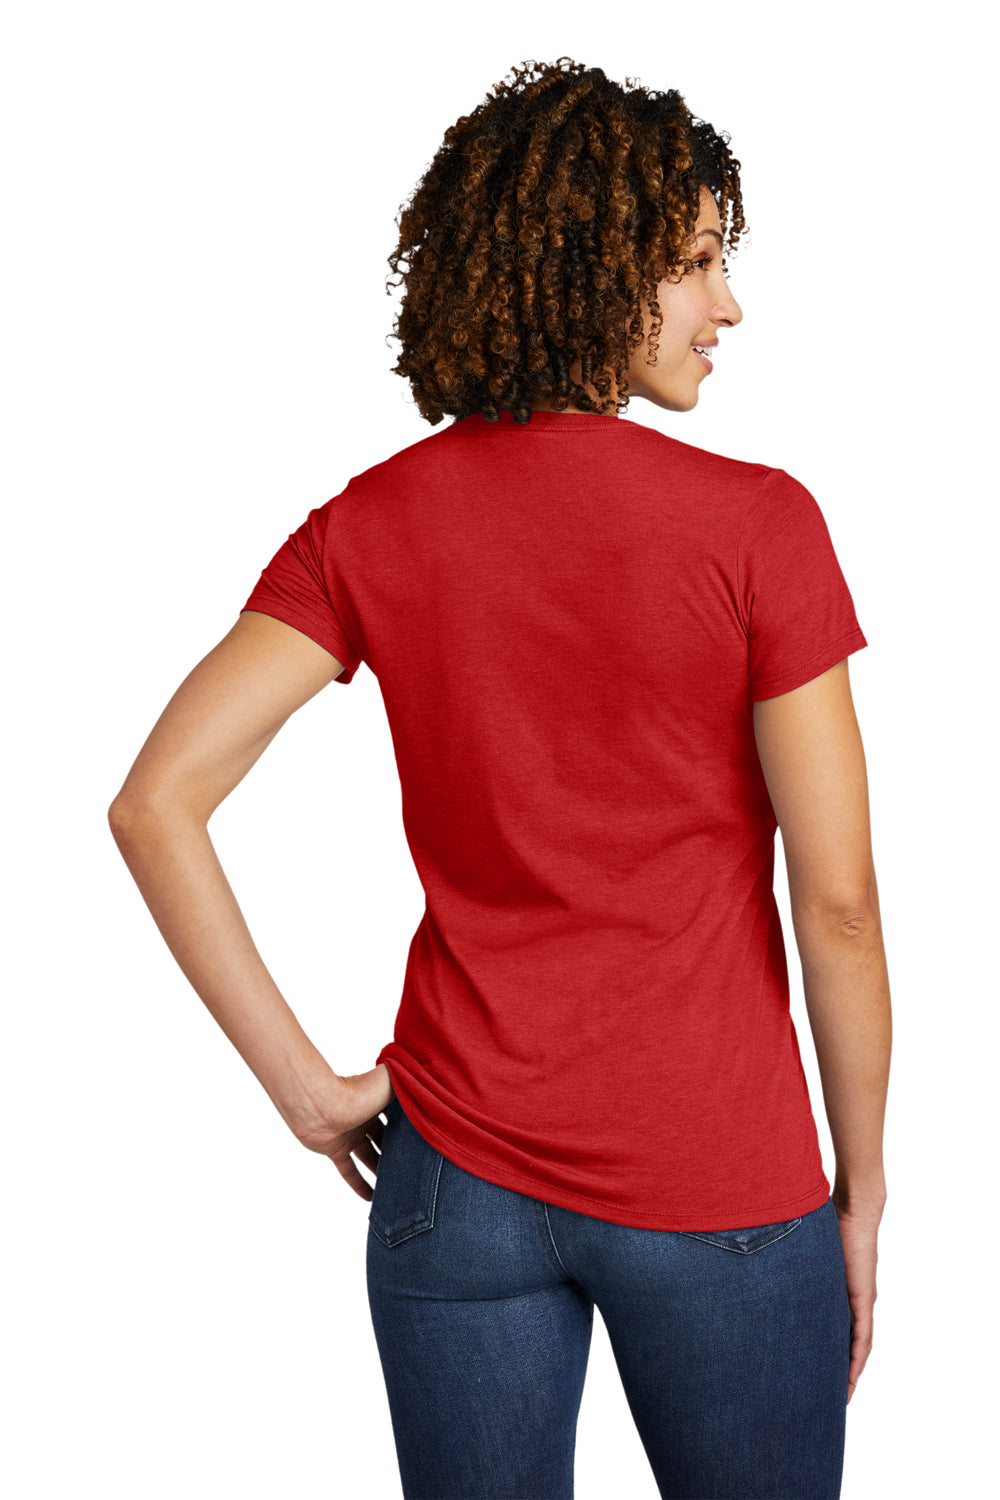 Allmade AL2018 Womens Short Sleeve V-Neck T-Shirt Rise Up Red Model Back